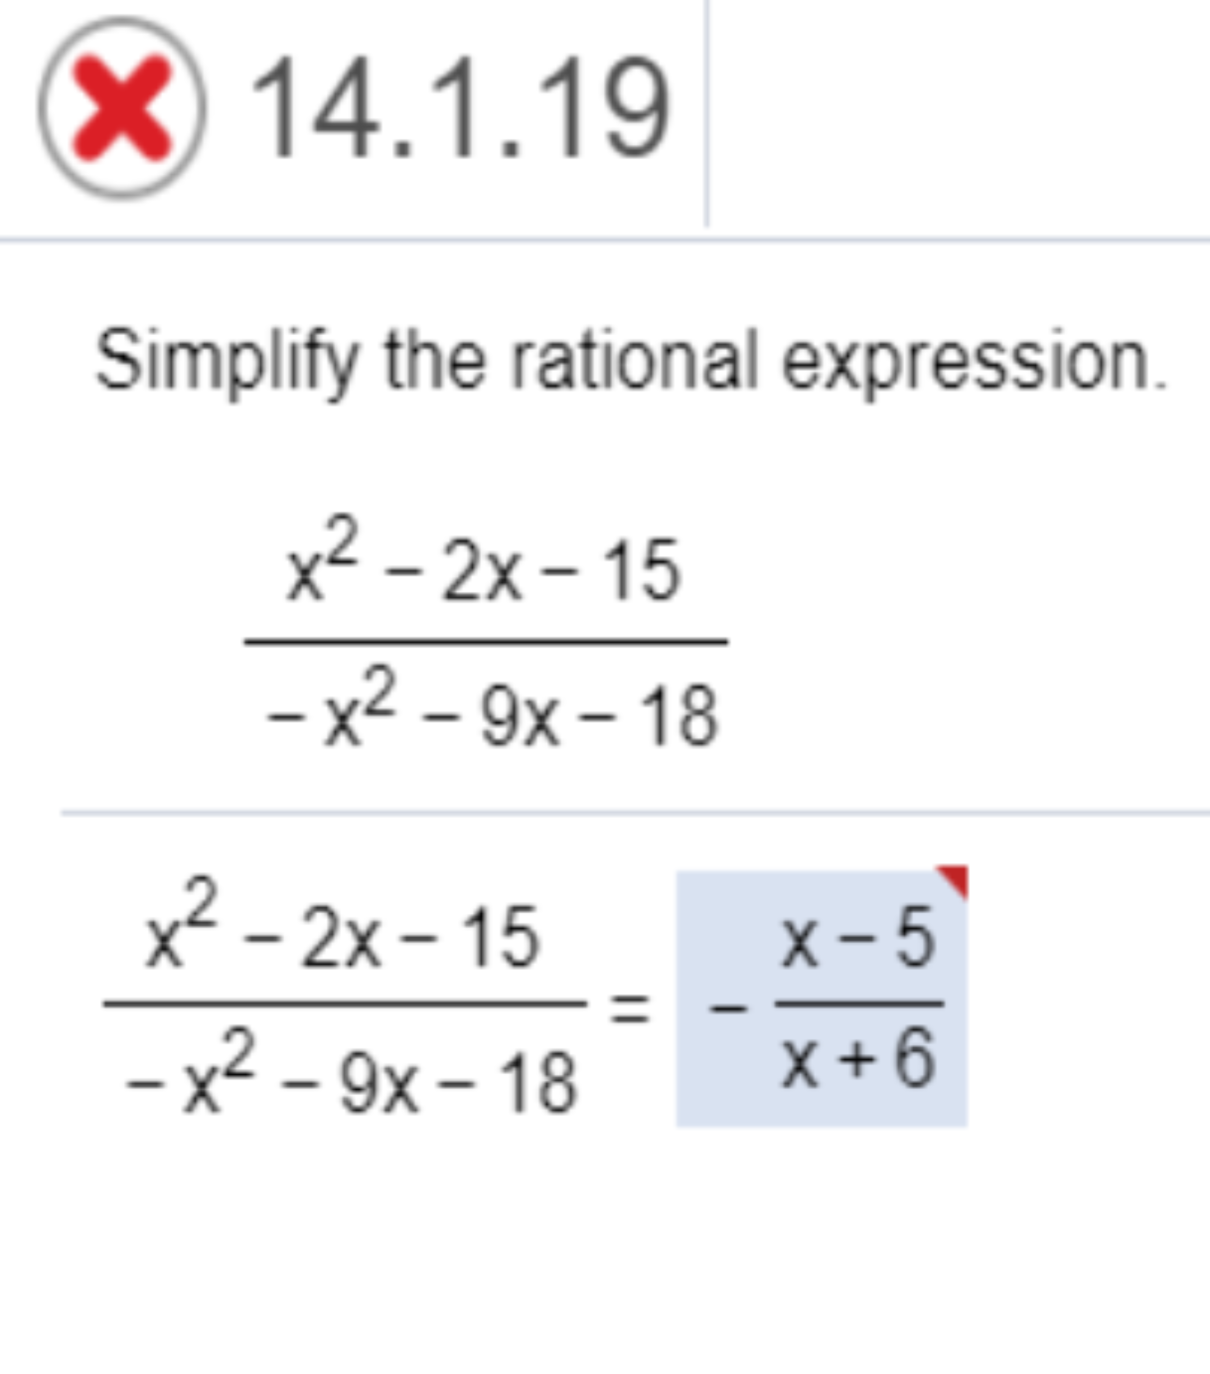 X14.1.19
Simplify the rational expression.
x2-2x-15
- x2-9x-18
x2-2x-15
X-5
- x2 -9x-18
X+6
